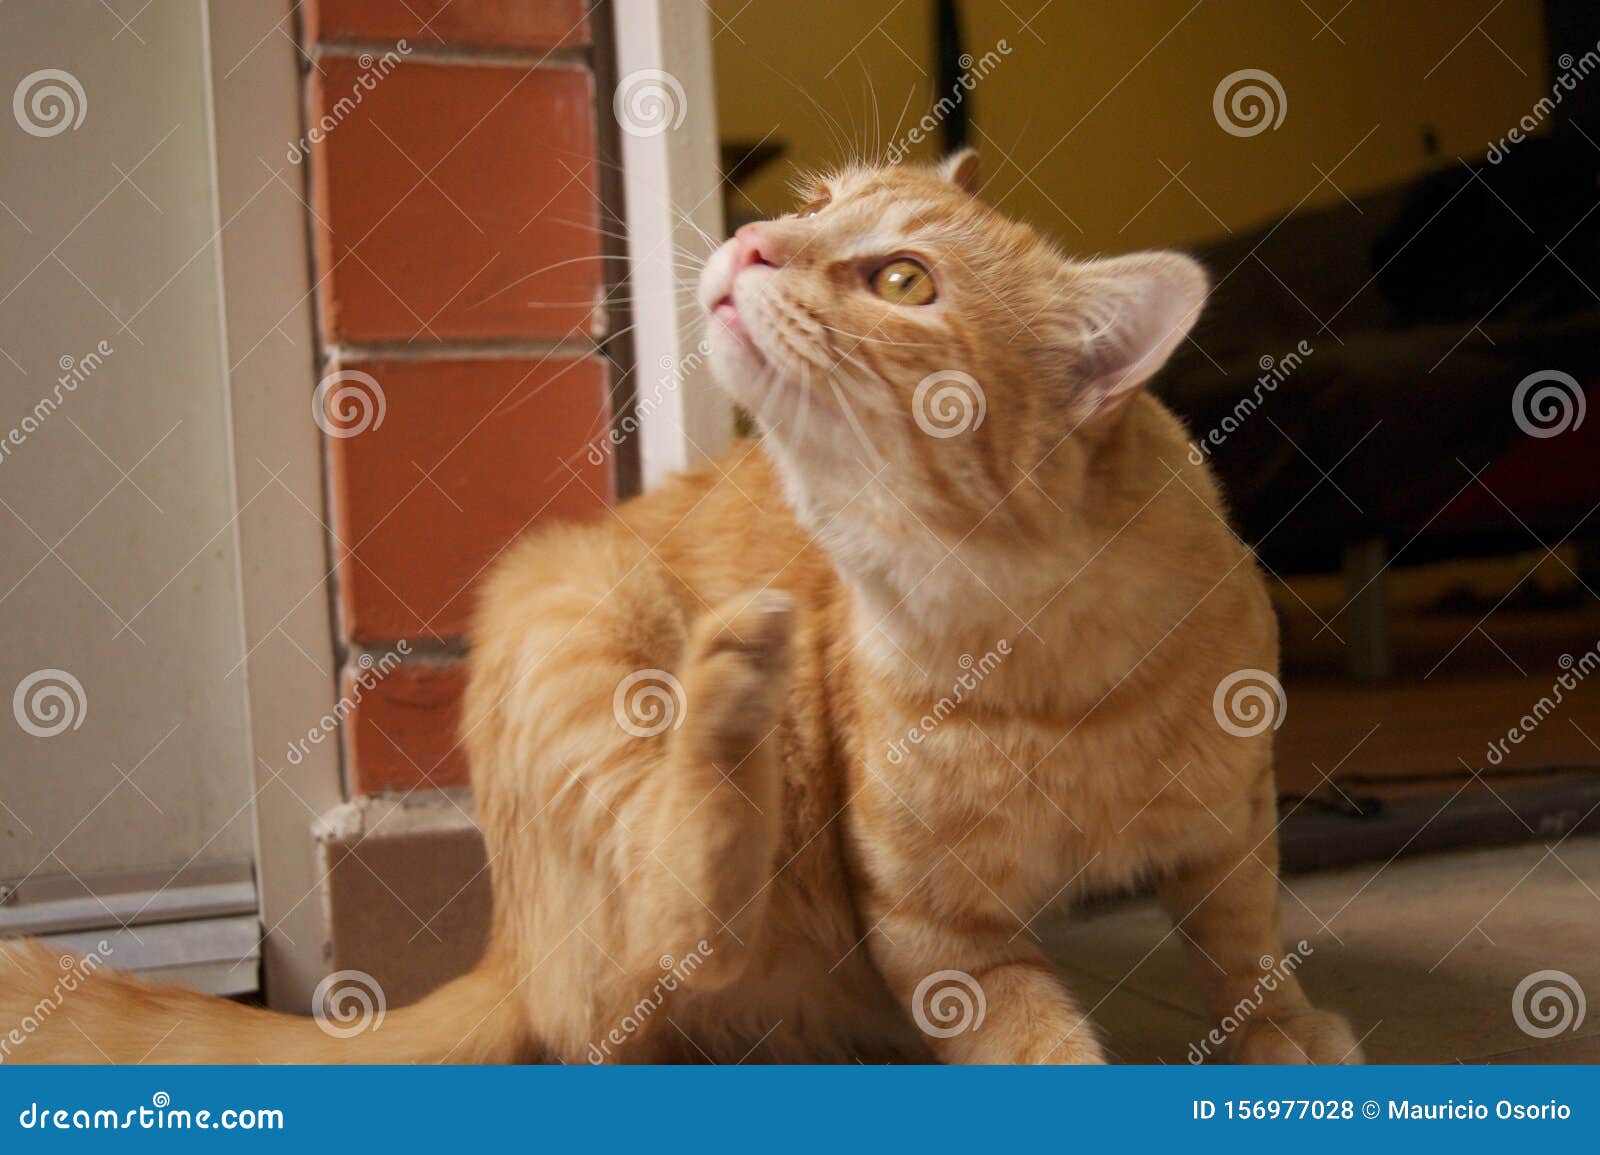 yellow cat scratching gato